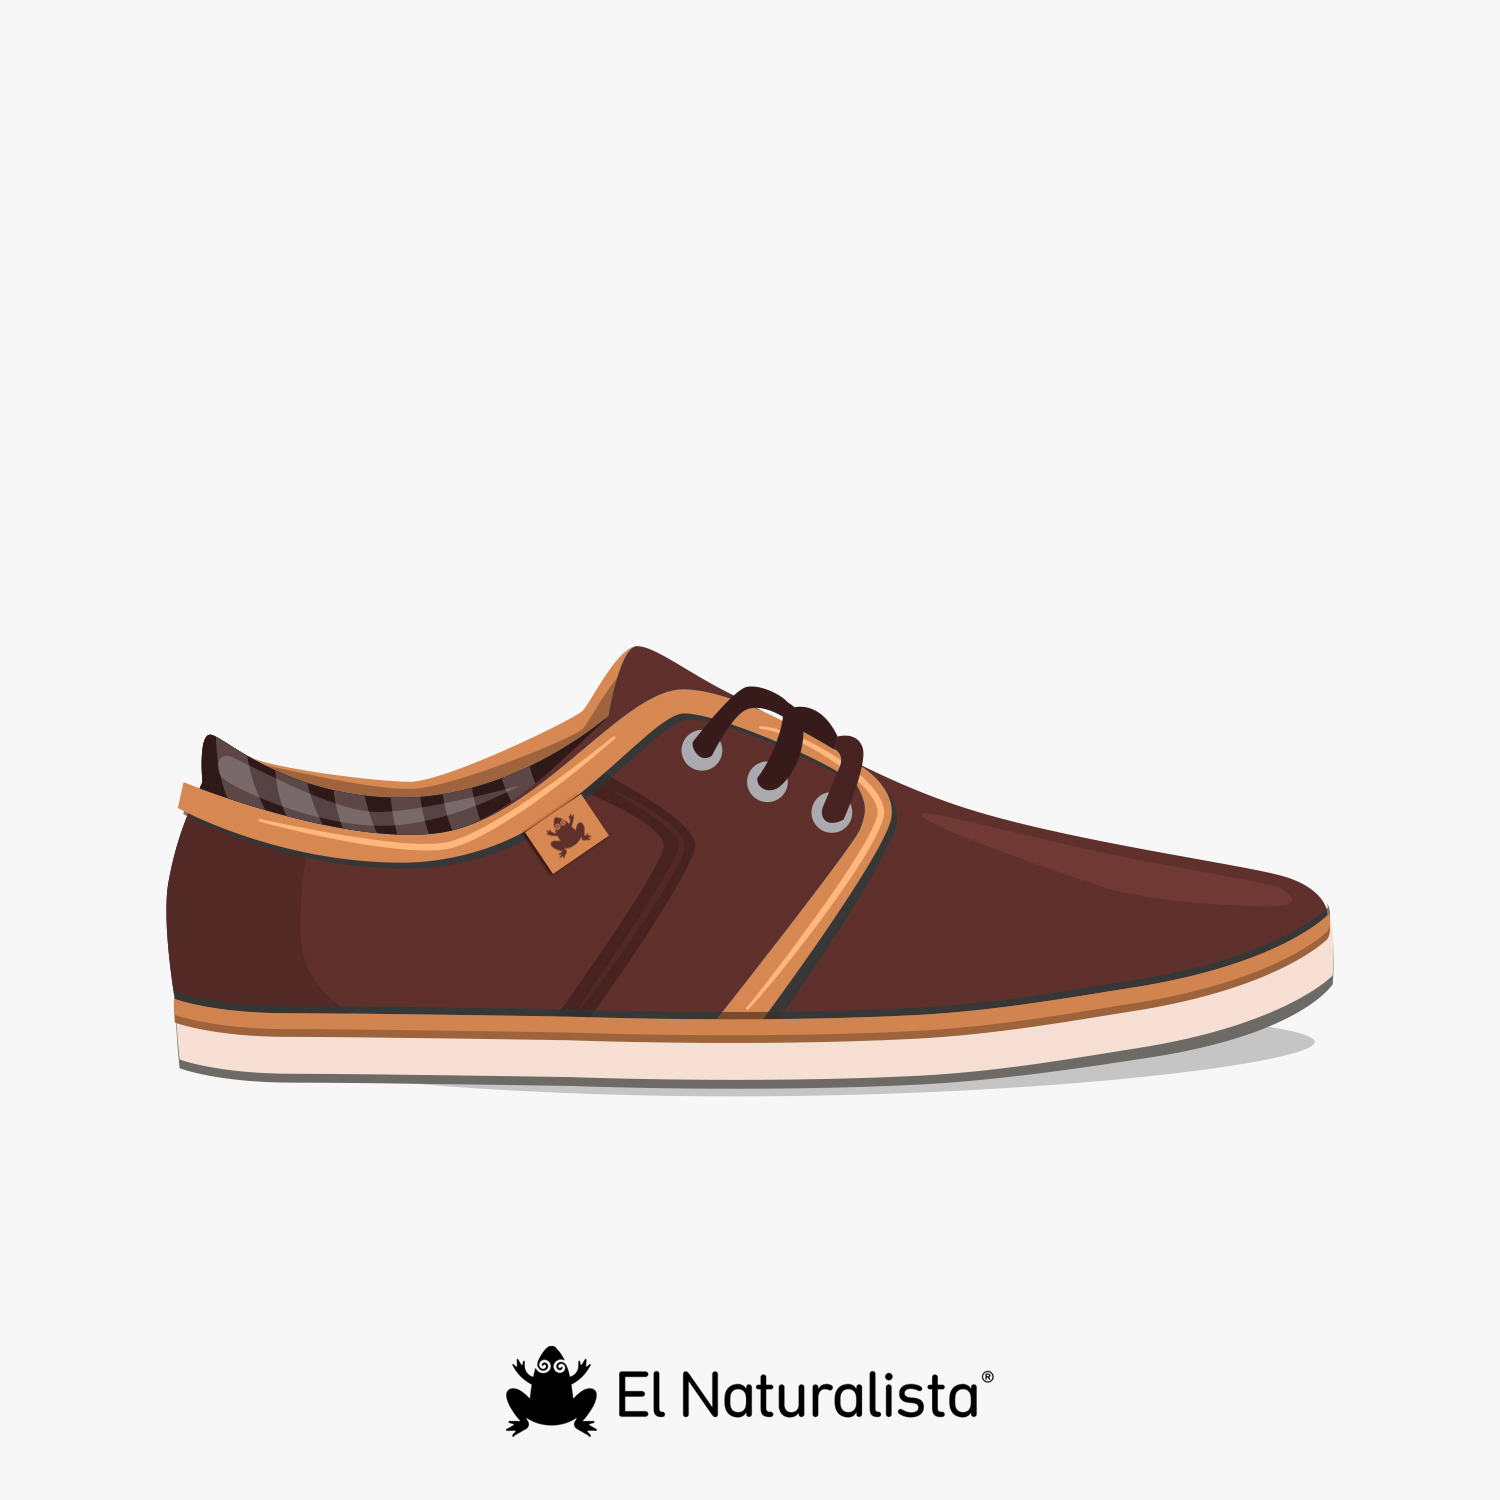 El Naturalista Women's Torcal N388 Flat Sandal